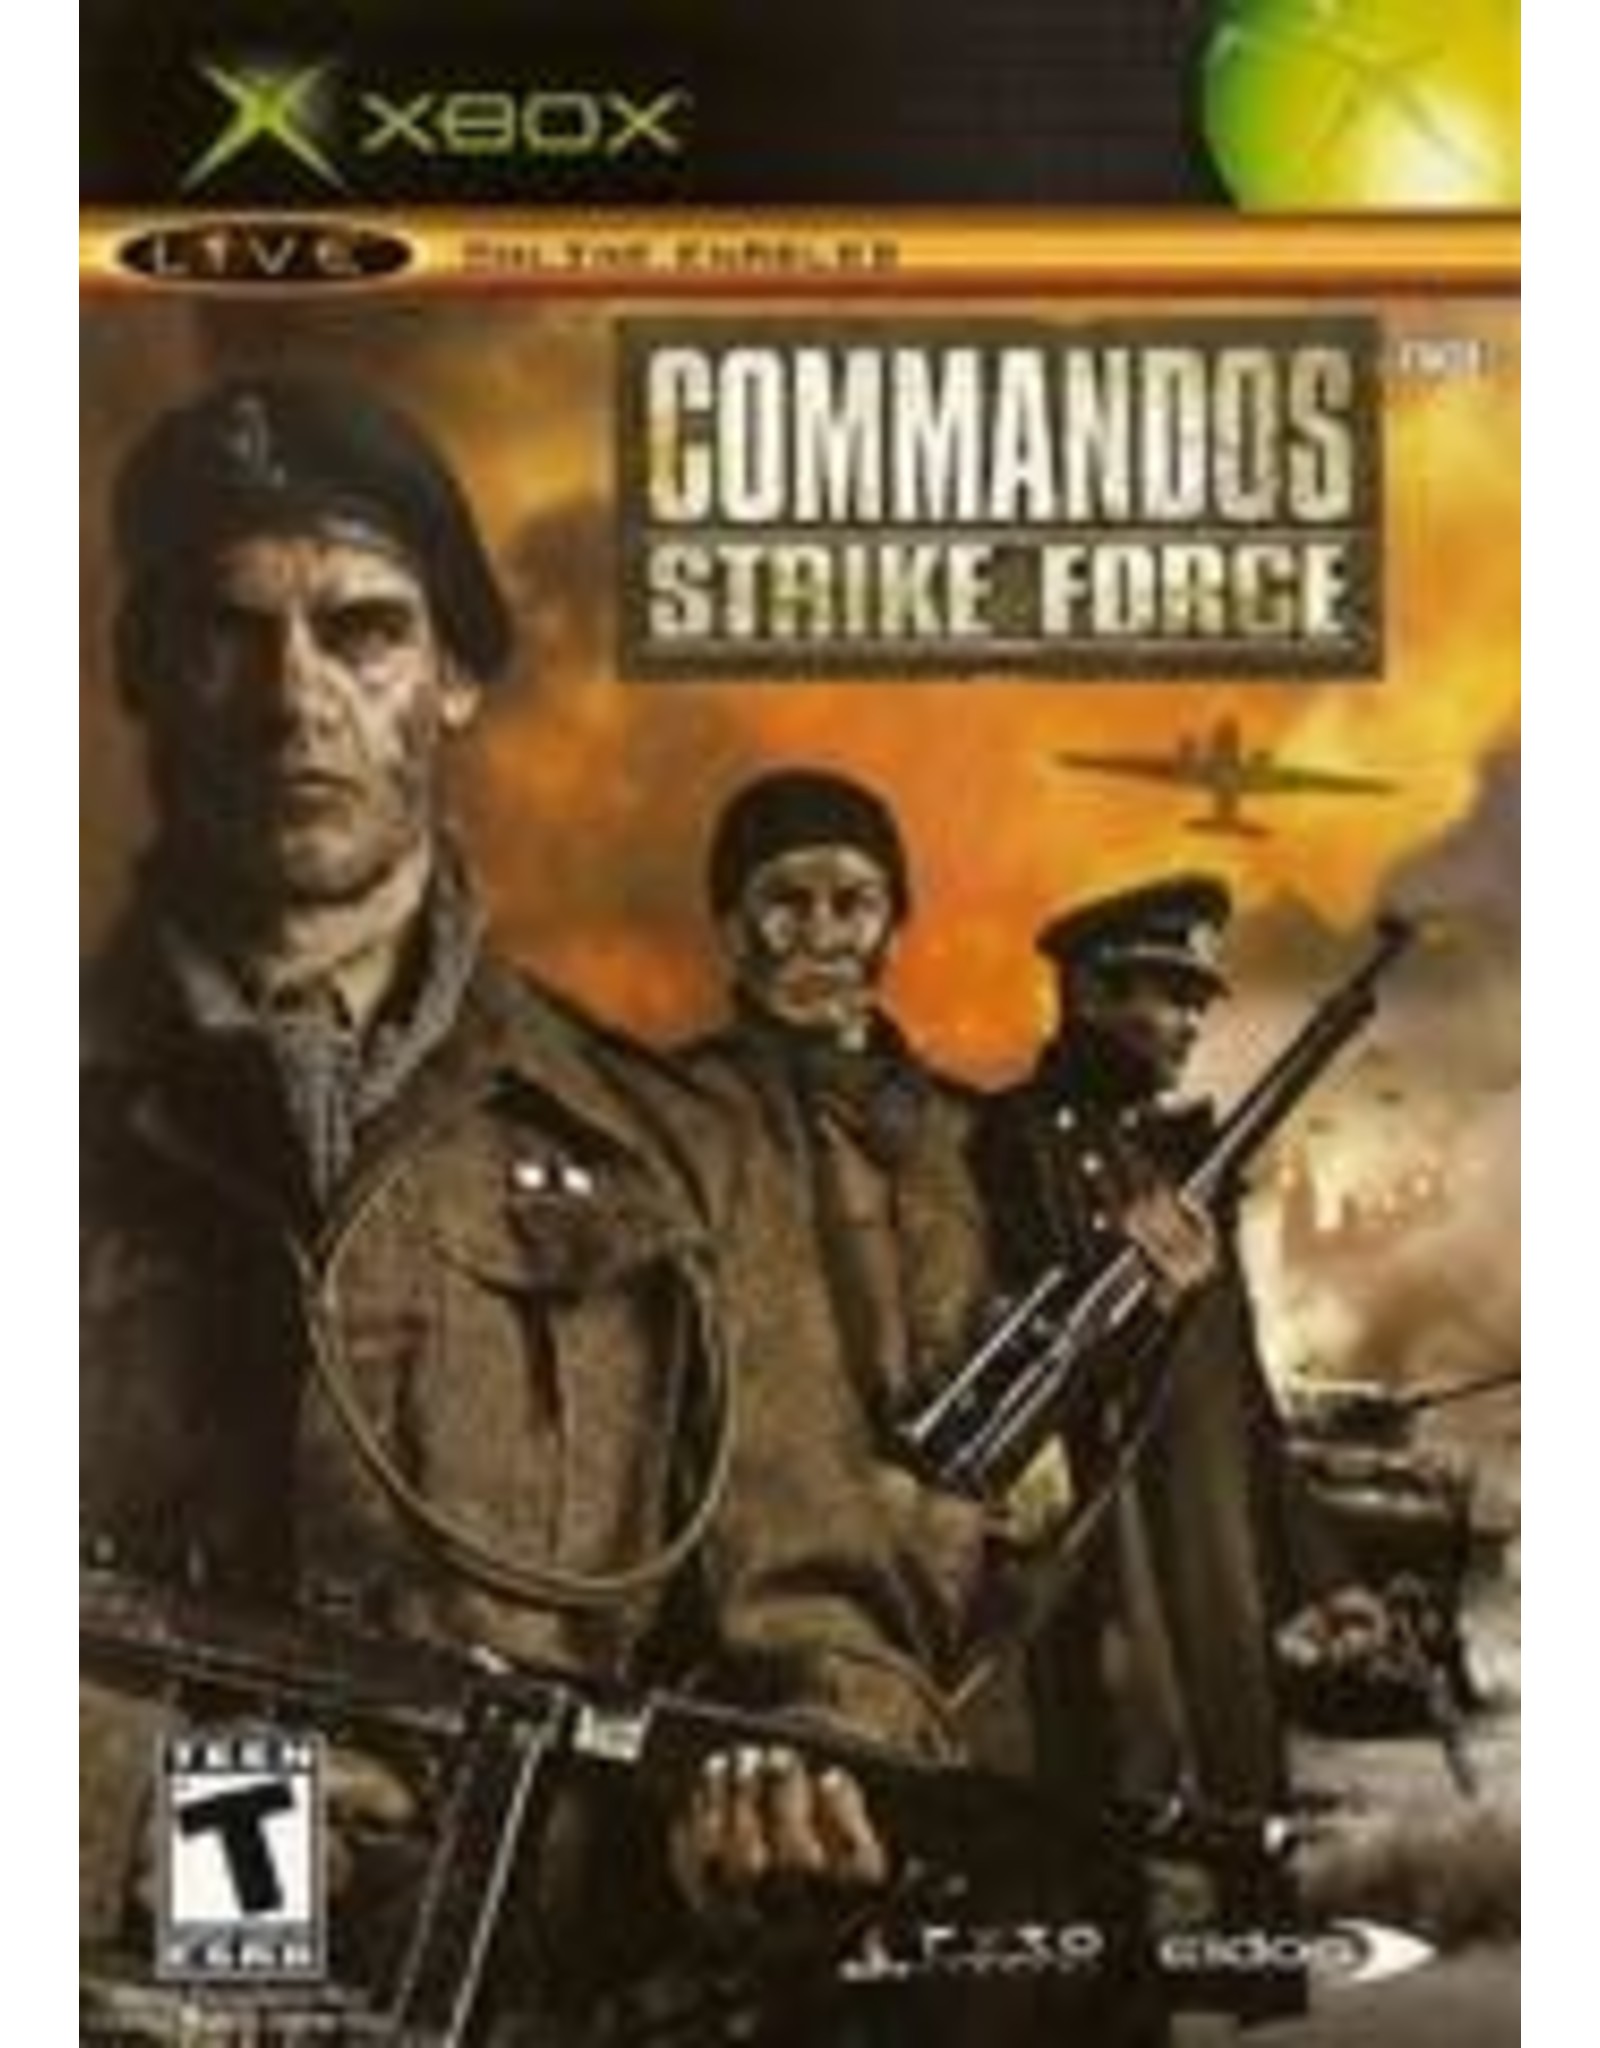 Xbox Commandos Strike Force (No Manual, Sticker on Sleeve)